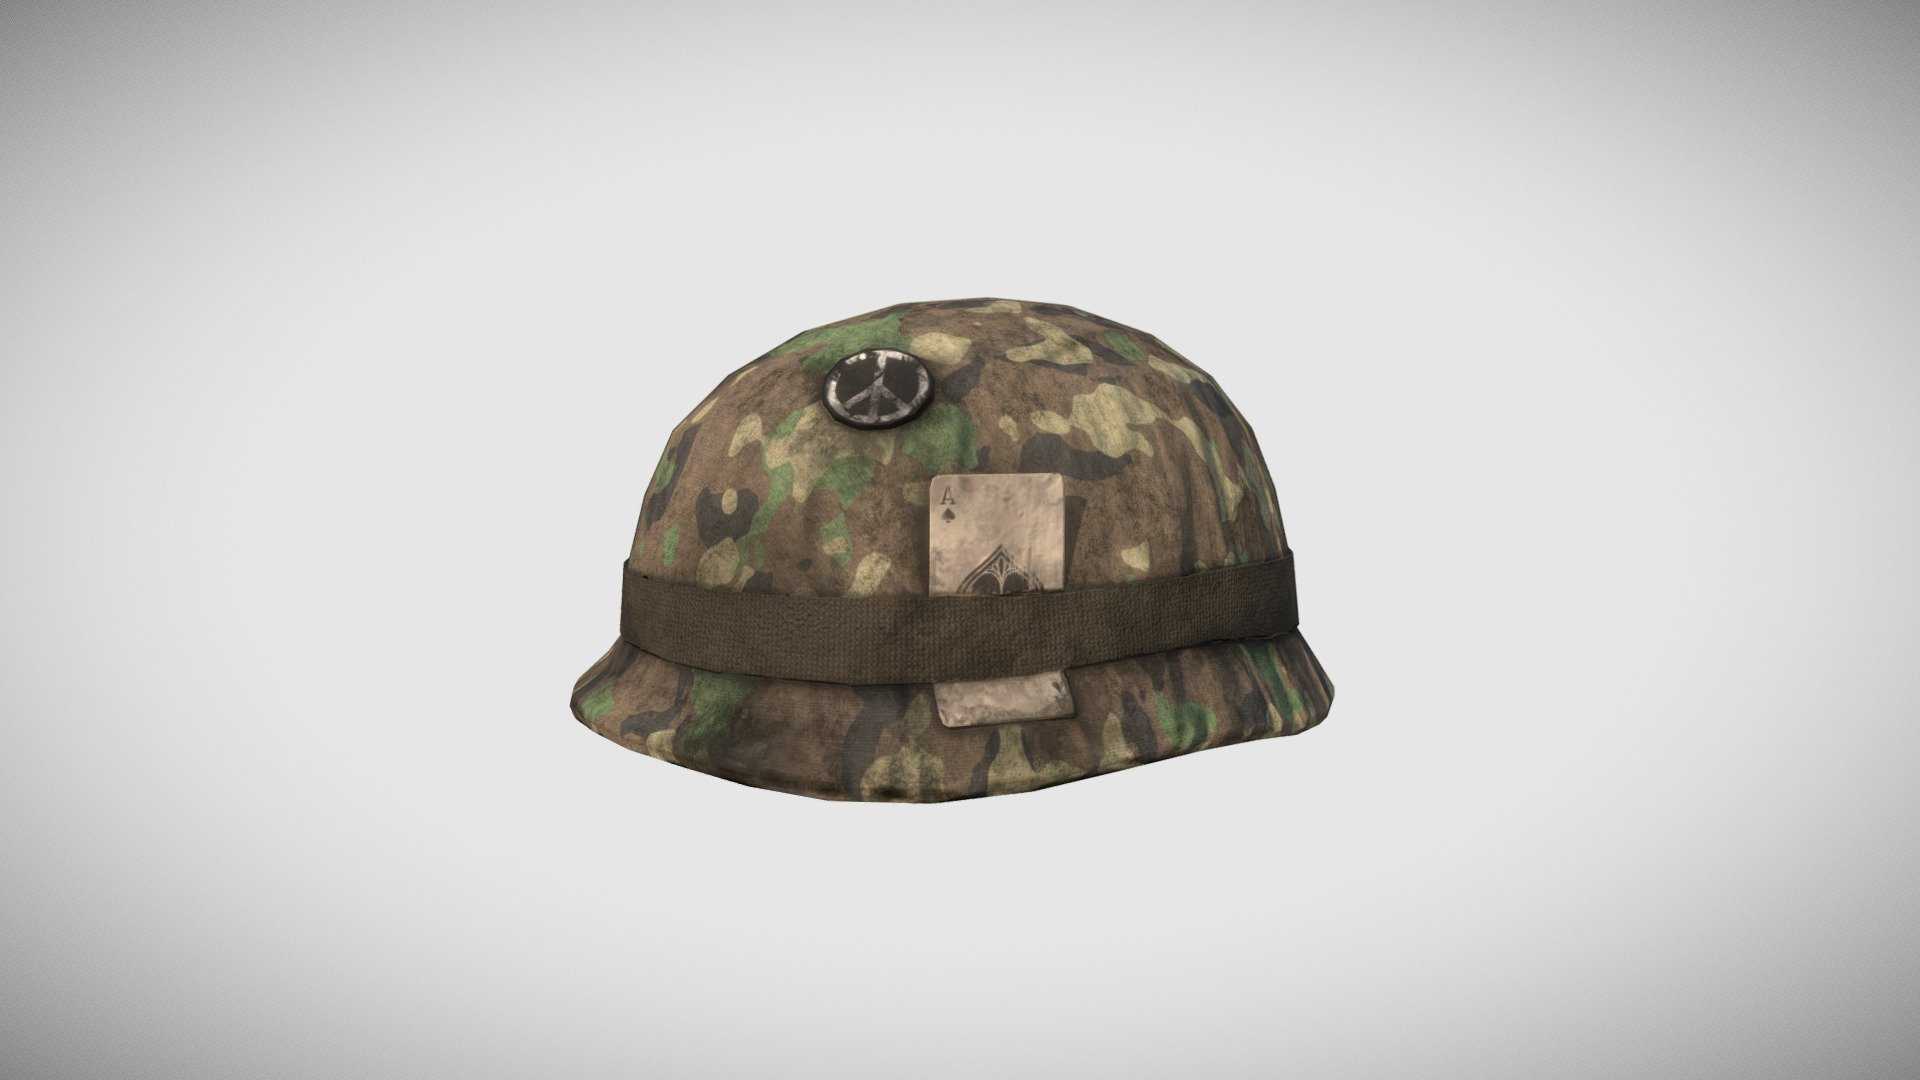 US Army helmet Vietnam war period M1